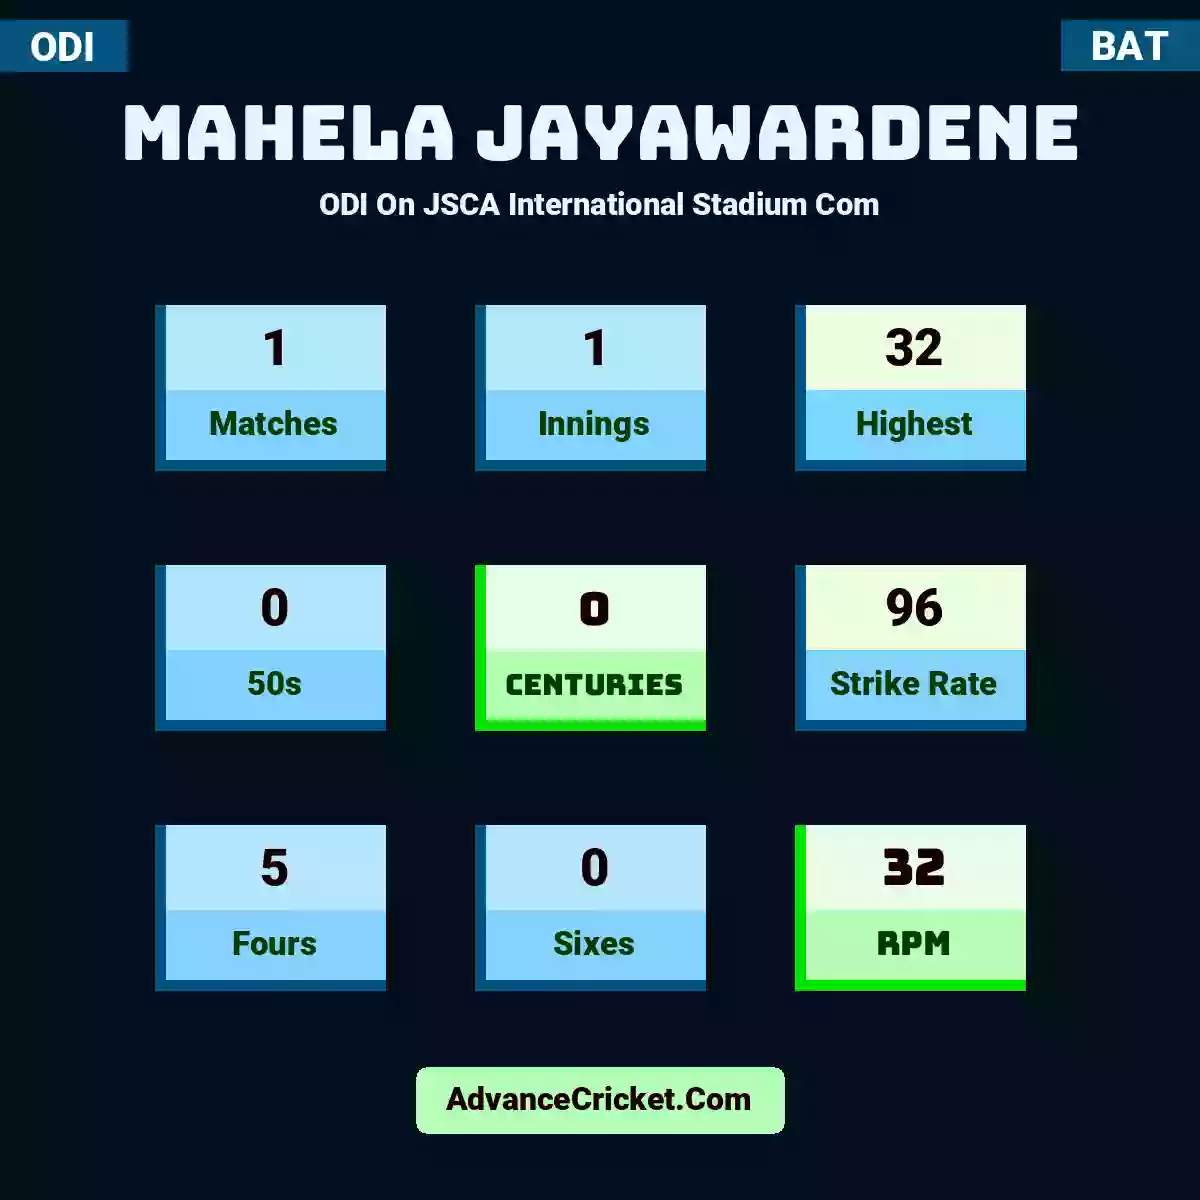 Mahela Jayawardene ODI  On JSCA International Stadium Com, Mahela Jayawardene played 1 matches, scored 32 runs as highest, 0 half-centuries, and 0 centuries, with a strike rate of 96. M.Jayawardene hit 5 fours and 0 sixes, with an RPM of 32.